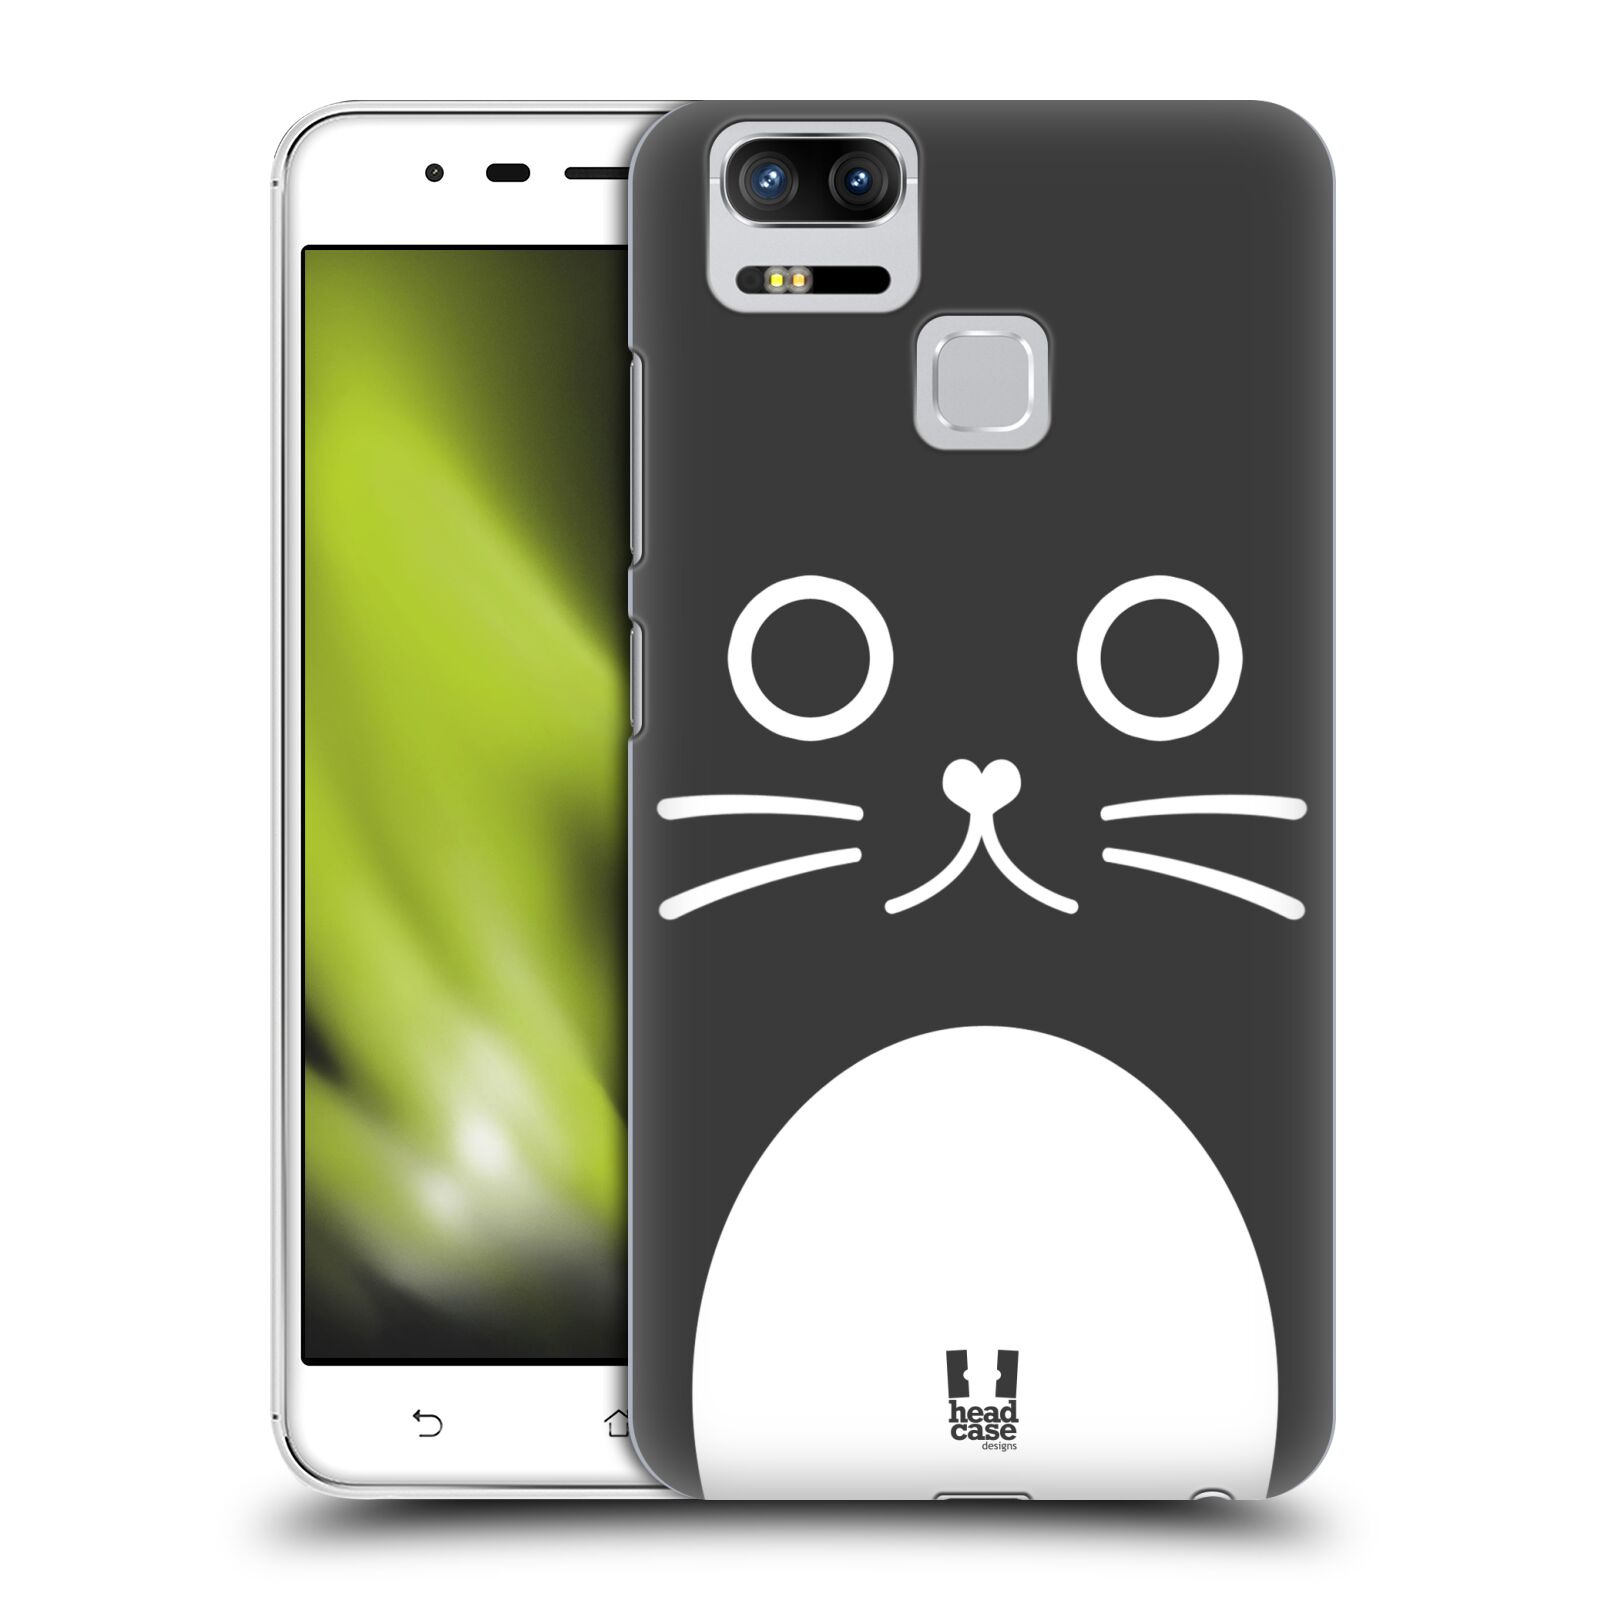 HEAD CASE plastový obal na mobil Asus Zenfone 3 Zoom ZE553KL vzor Cartoon Karikatura kreslená zvířátka kočka